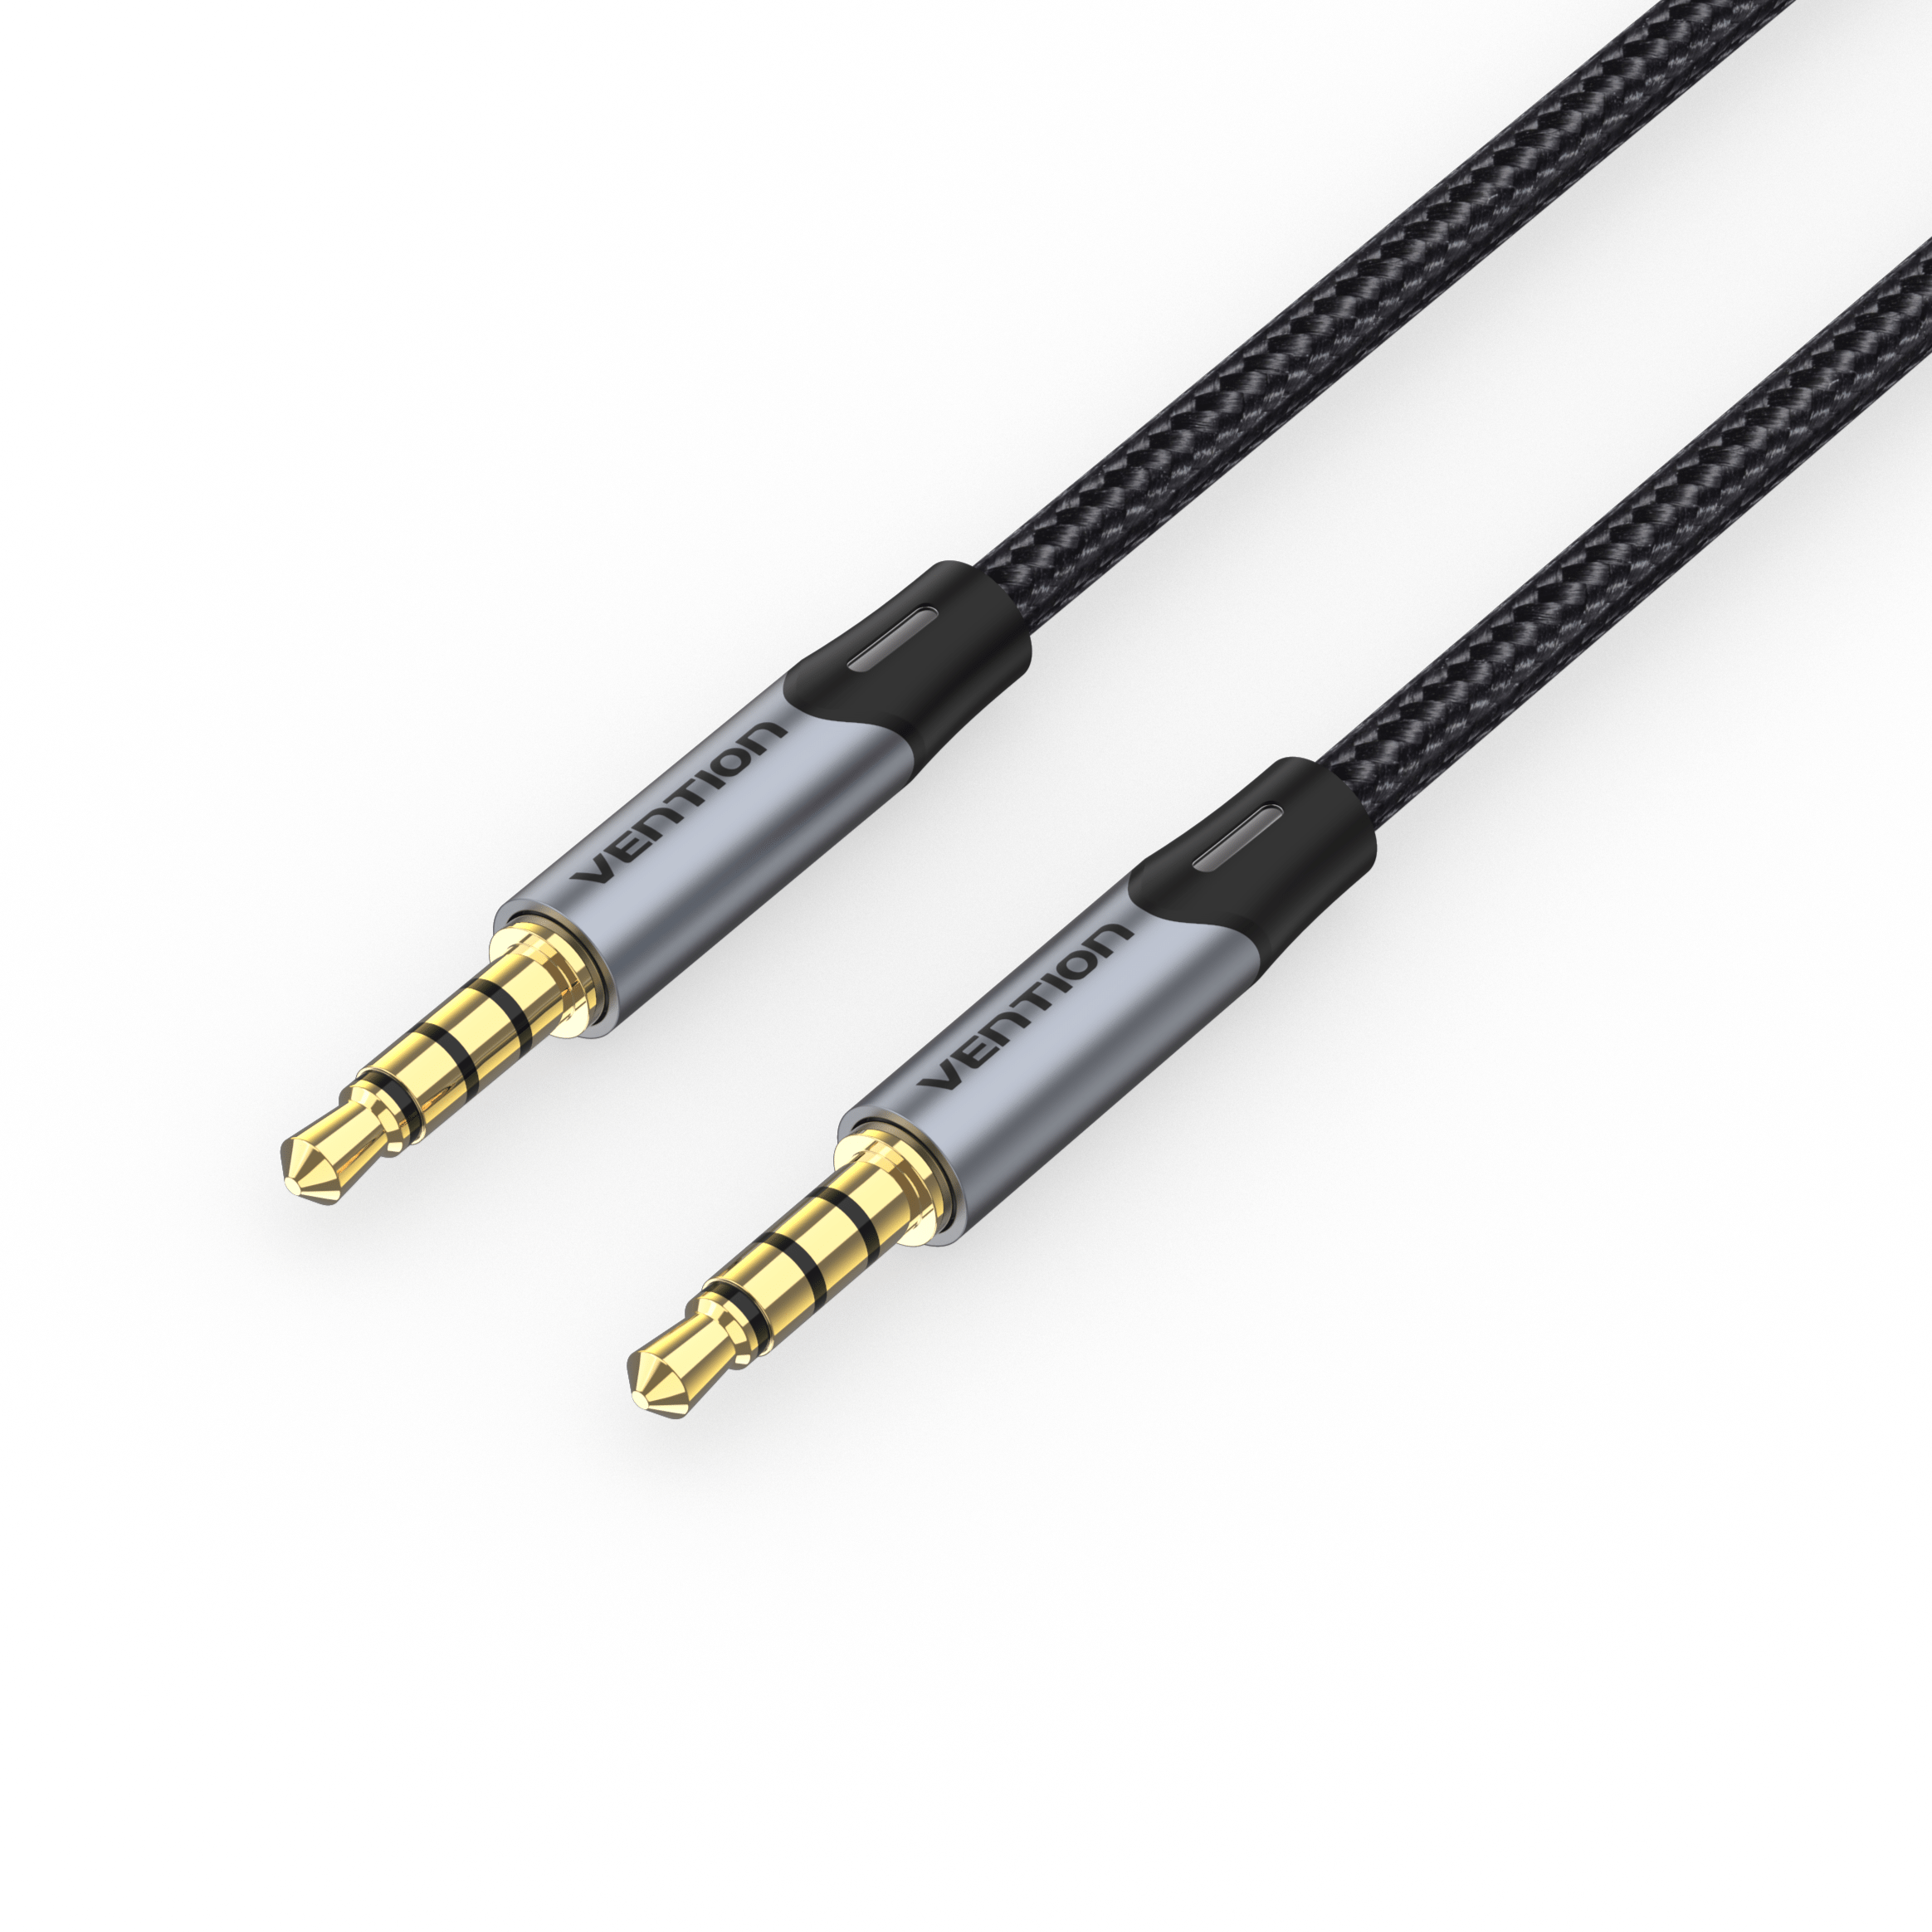 Cable auxiliar Jack 3,5 macho a macho, Cable de Audio HiFi Jack de 3,5mm  para guitarra, micrófono para coche, auriculares, altavoz, Cable auxiliar